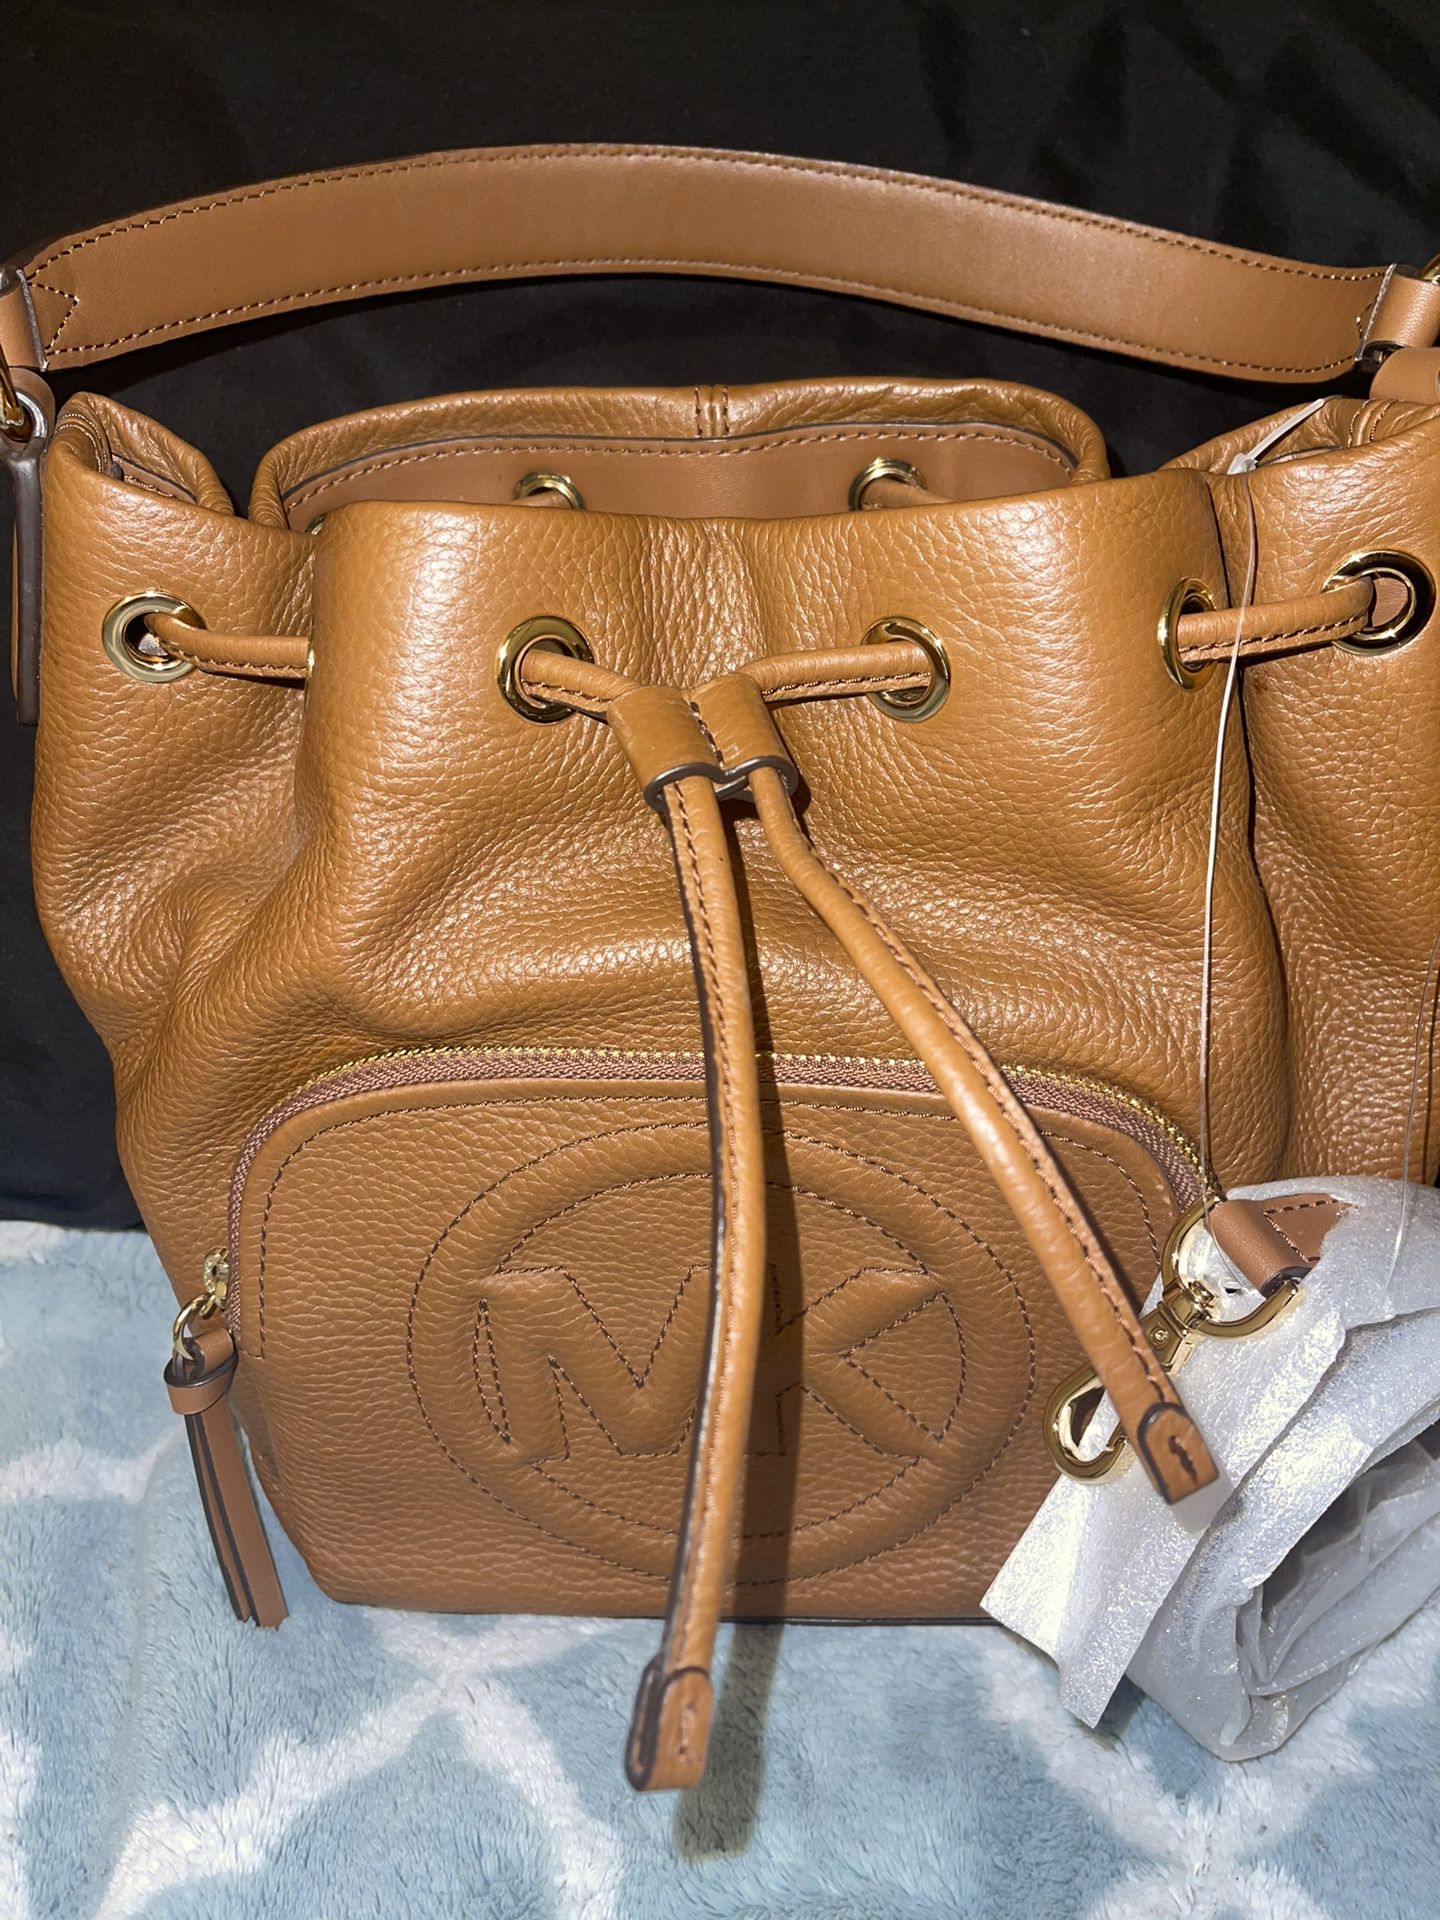 MKORS Leather Bag 